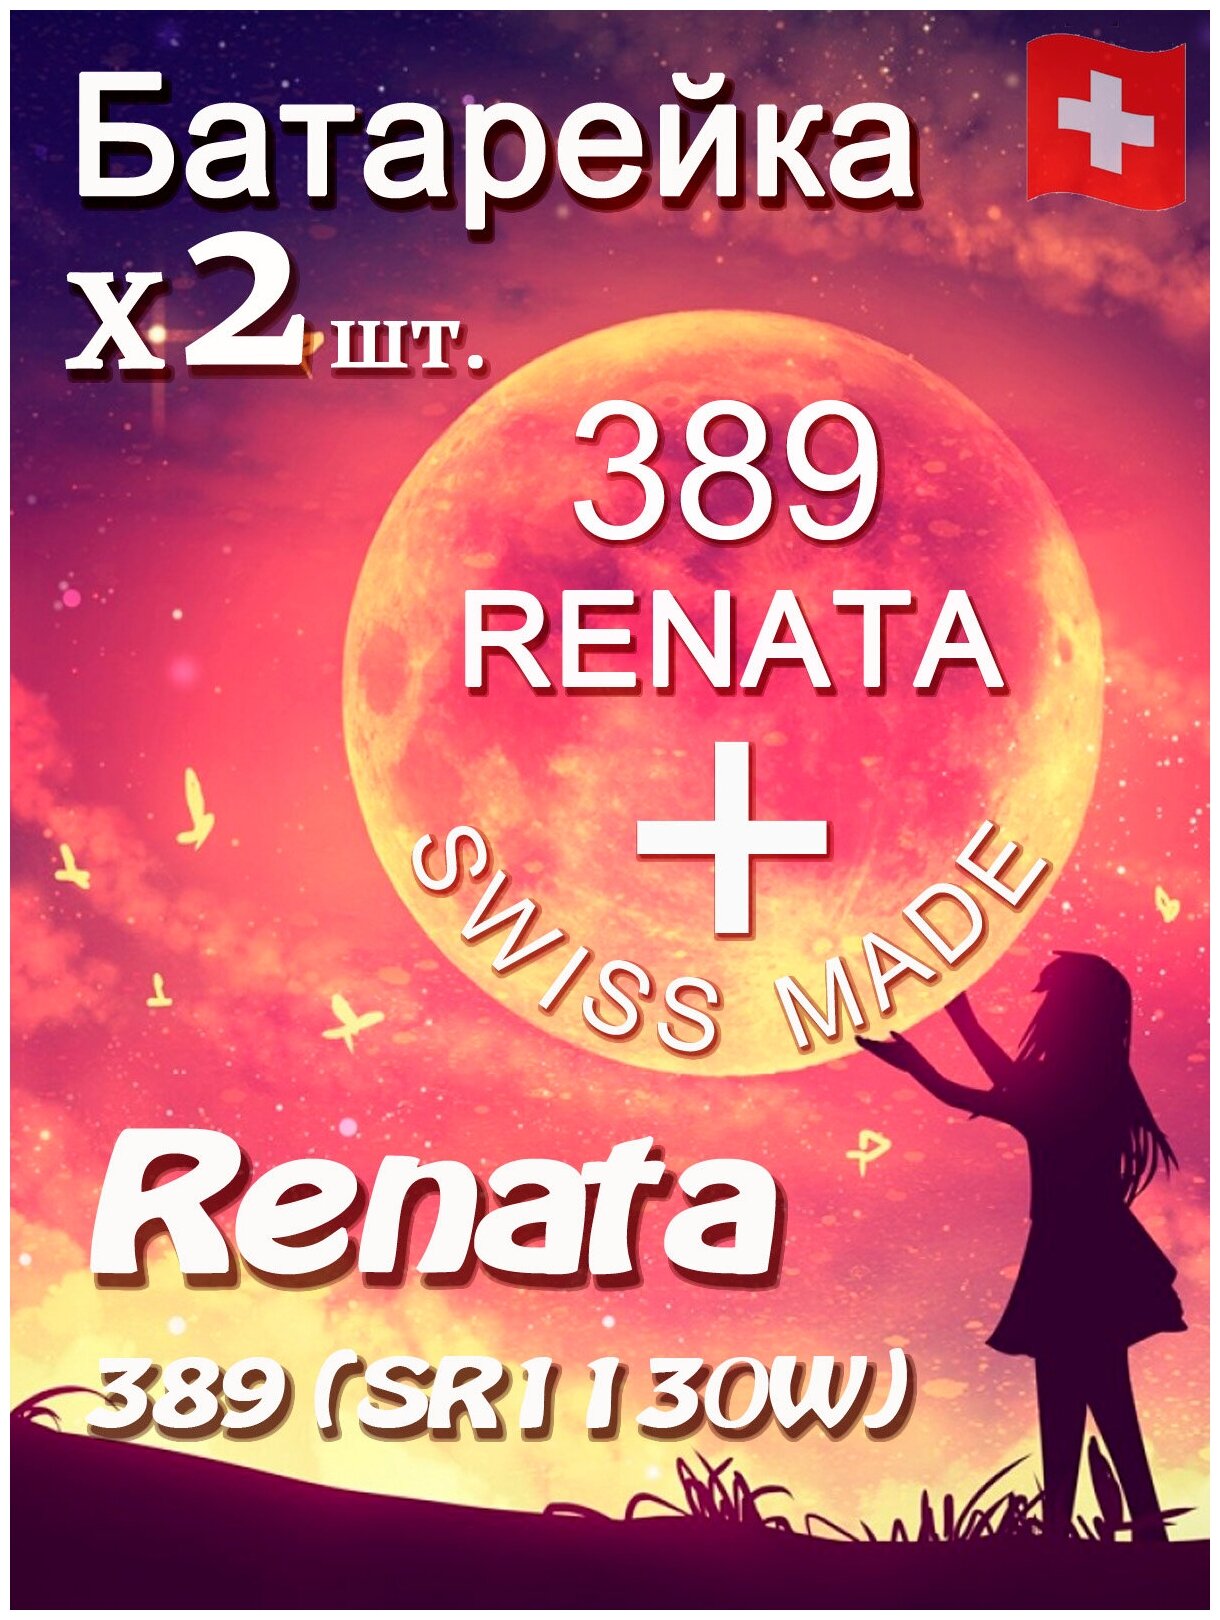 Батарейка Renata 389 2шт/Элемент питания рената 389 В10 (SR1130W)(без ртути) 2шт